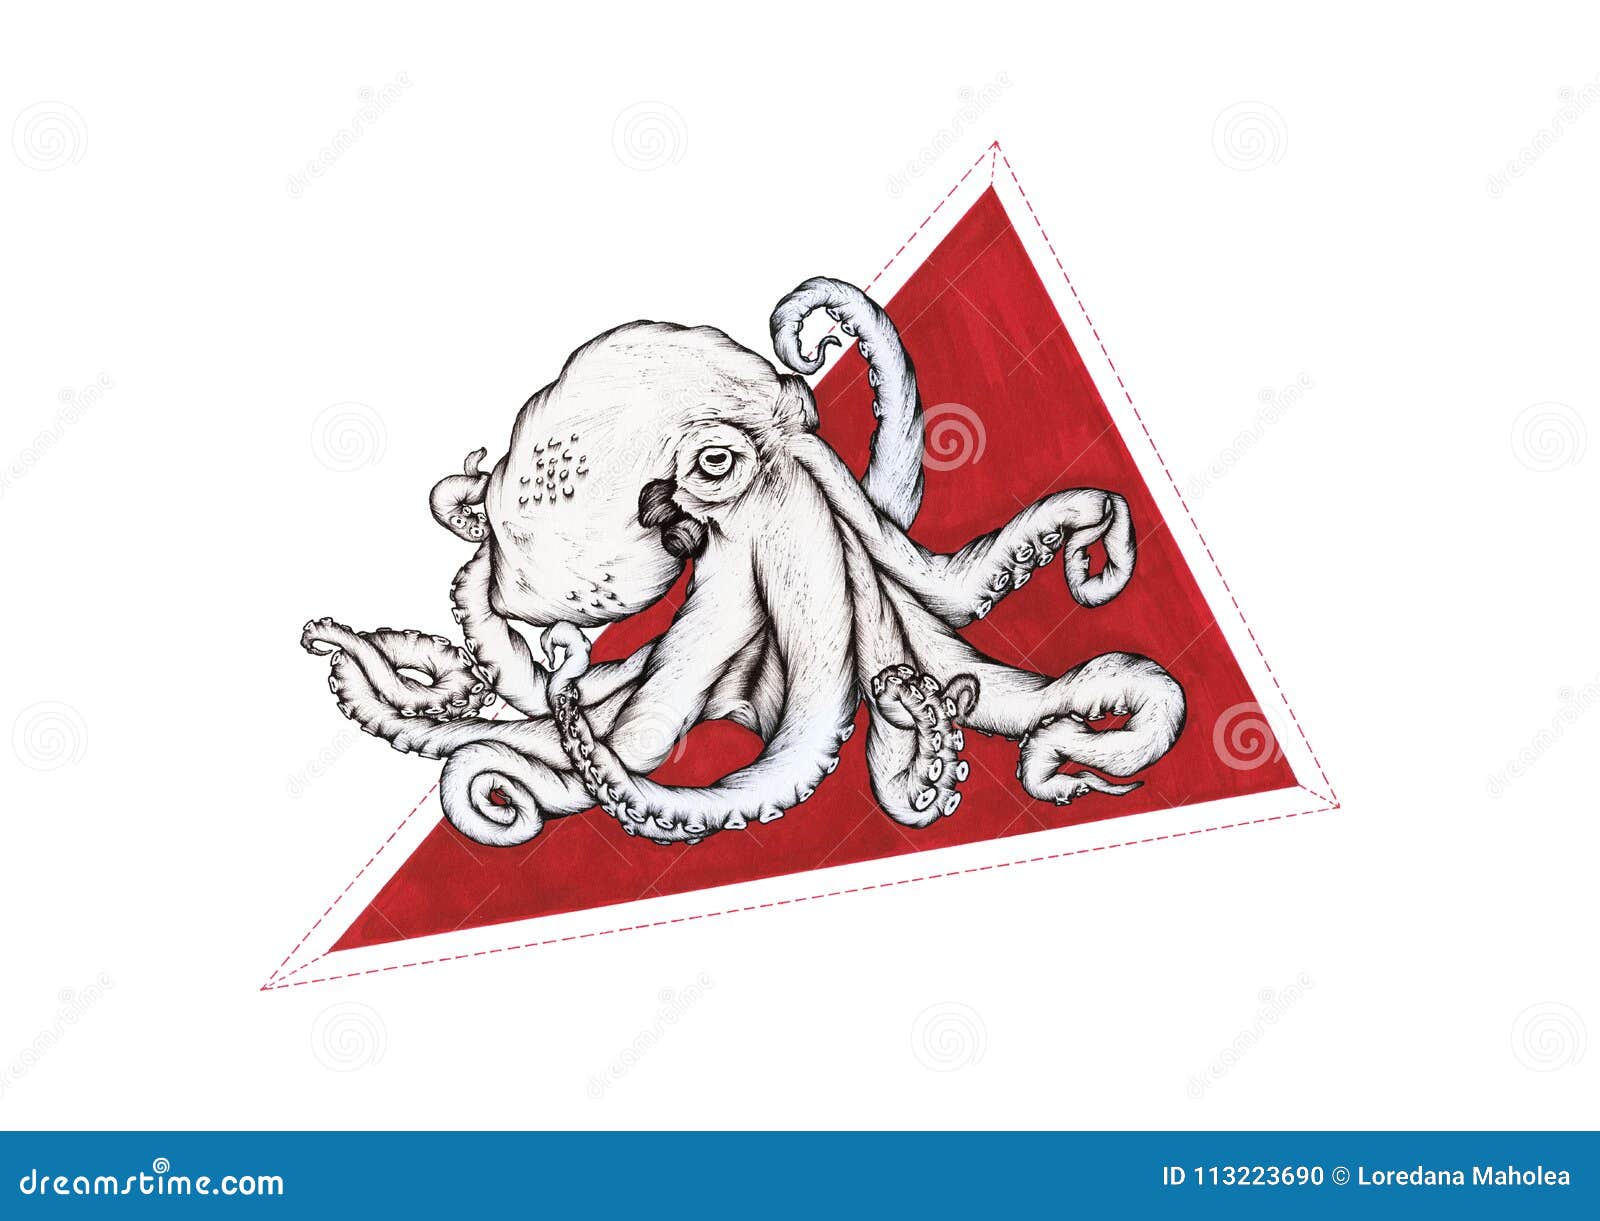 Octopus on Red Triangle Line Art Stock Illustration - Illustration